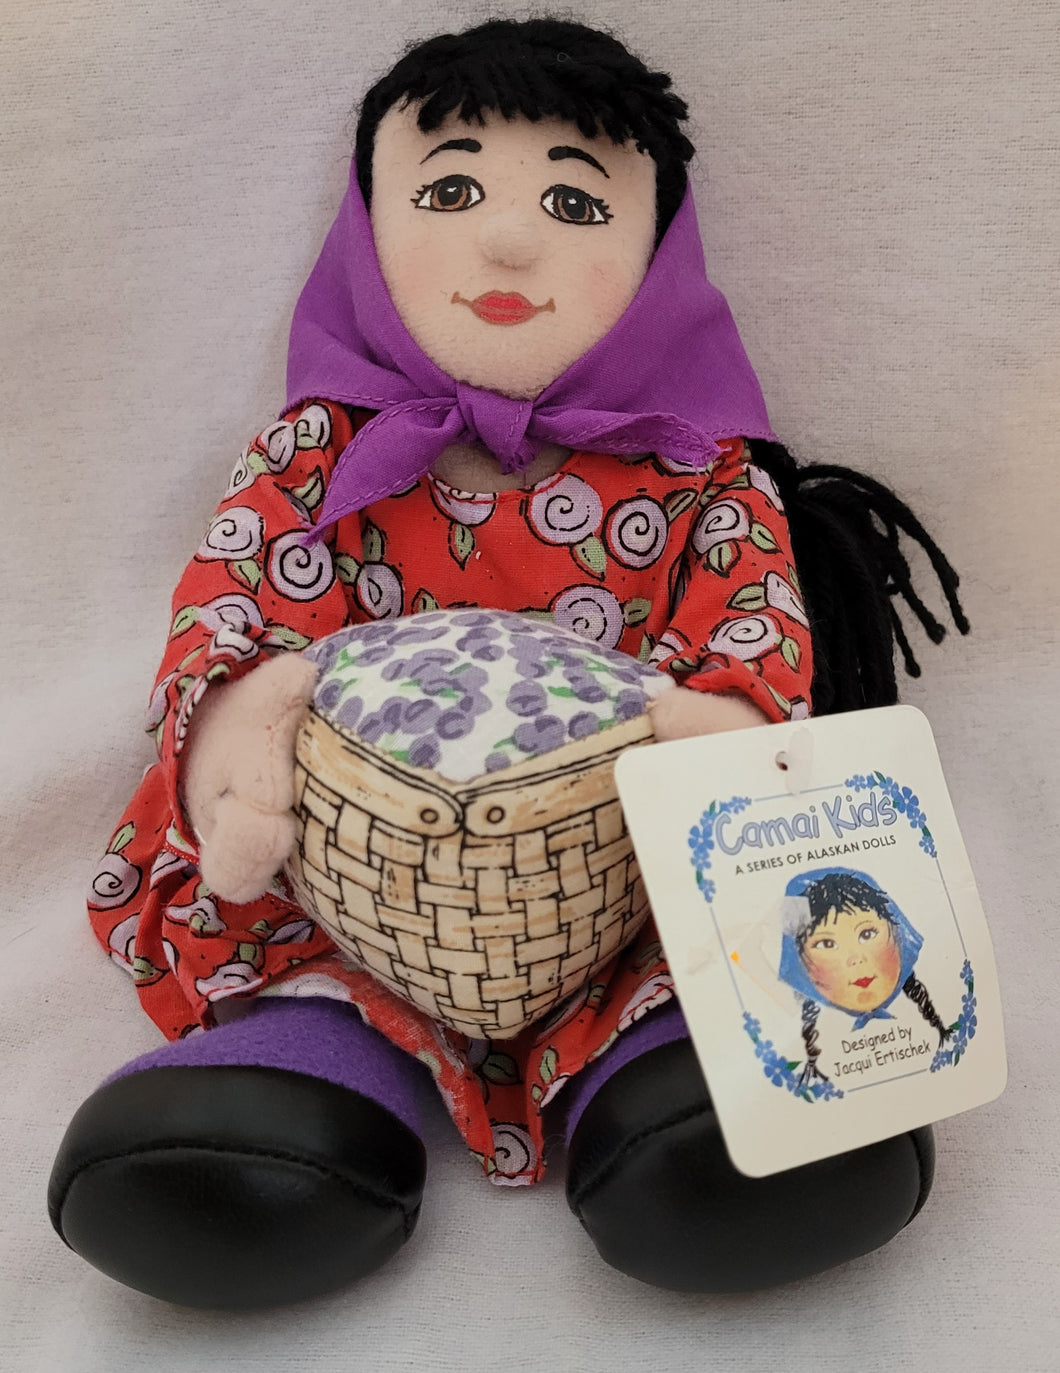 Camai Kids Collectors Doll Designed by Jacqui Ertischek